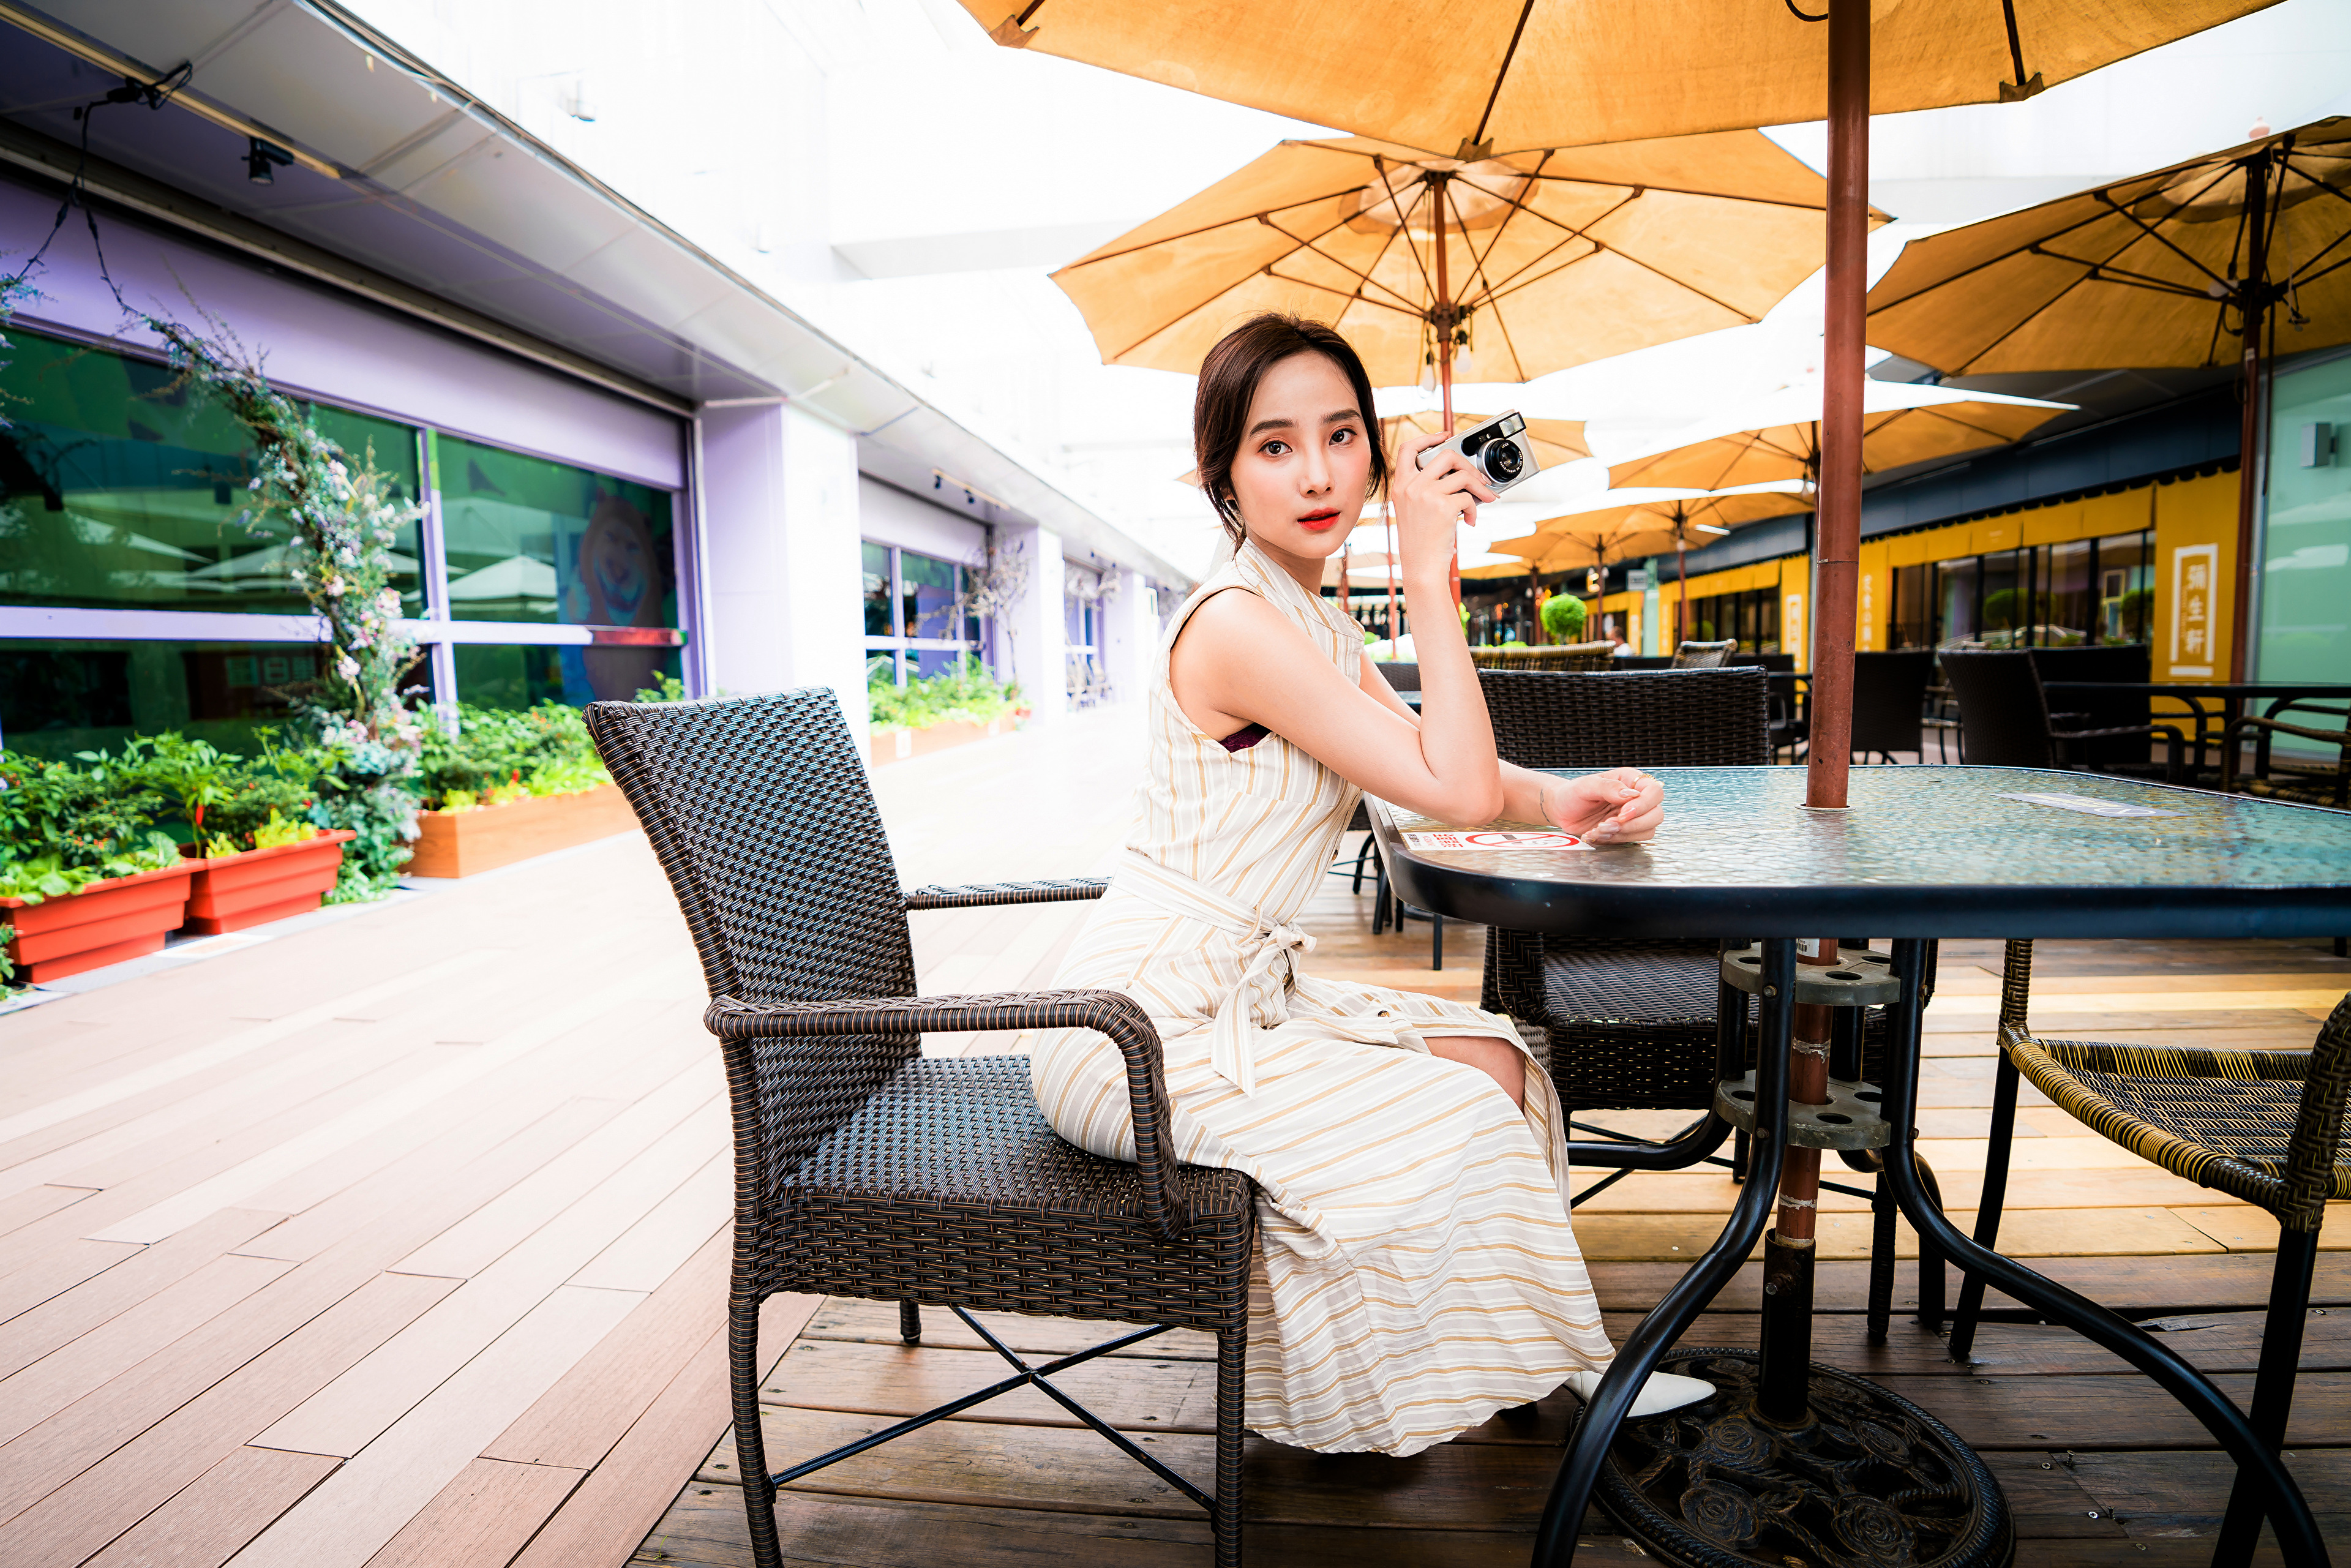 Asian Model Women Long Hair Brunette Table Chair Umbrella Plant Pot Plants Camera Dress White Shoes  3840x2561